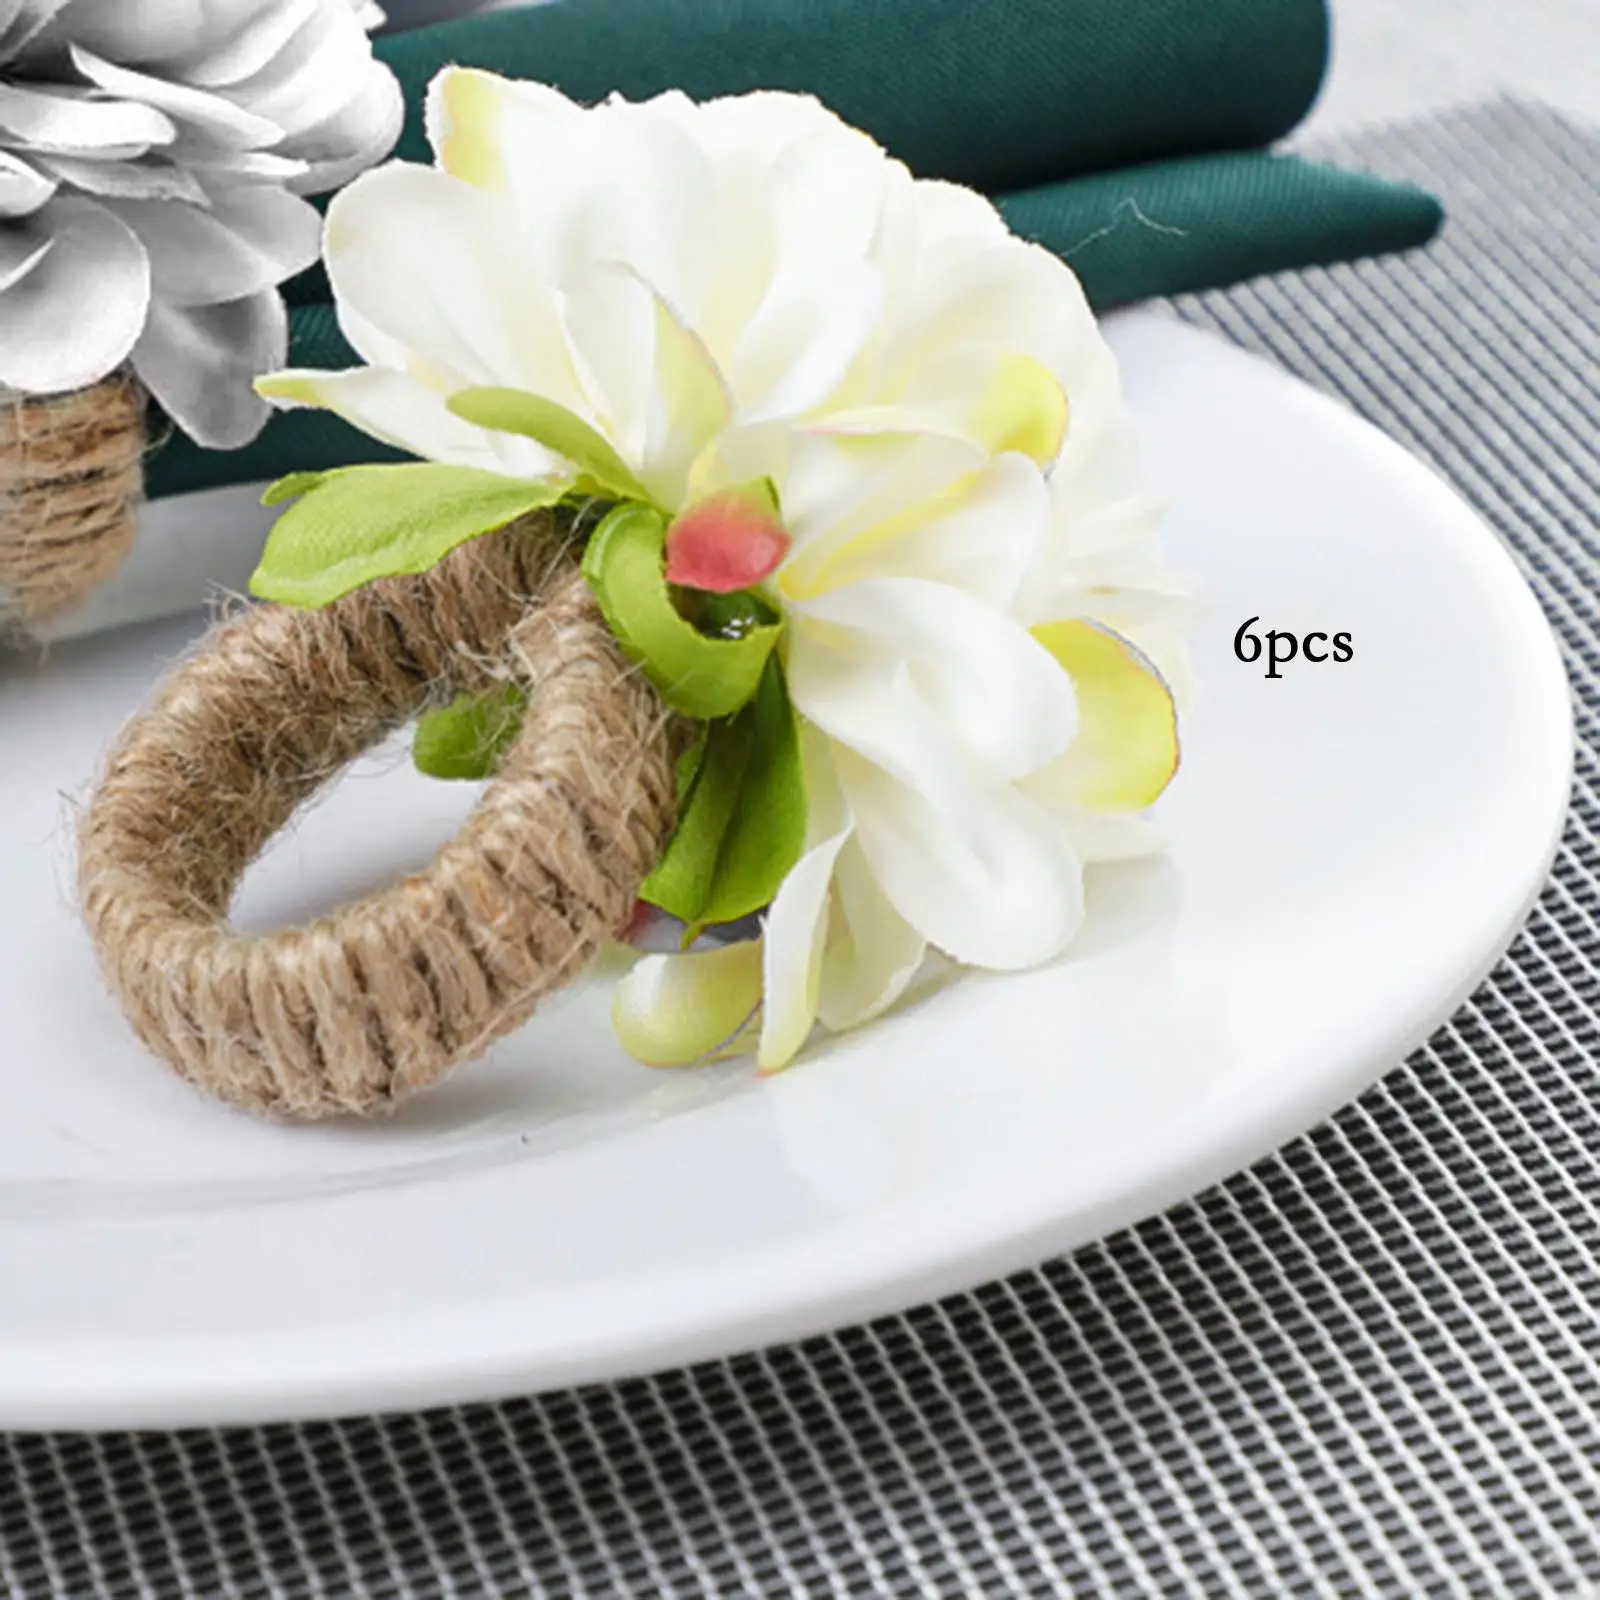 6 Pieces Flower Shaped Napkin Holder Crafts for Centerpieces Festival Wedding Thanksgiving Home Kitchen Decor